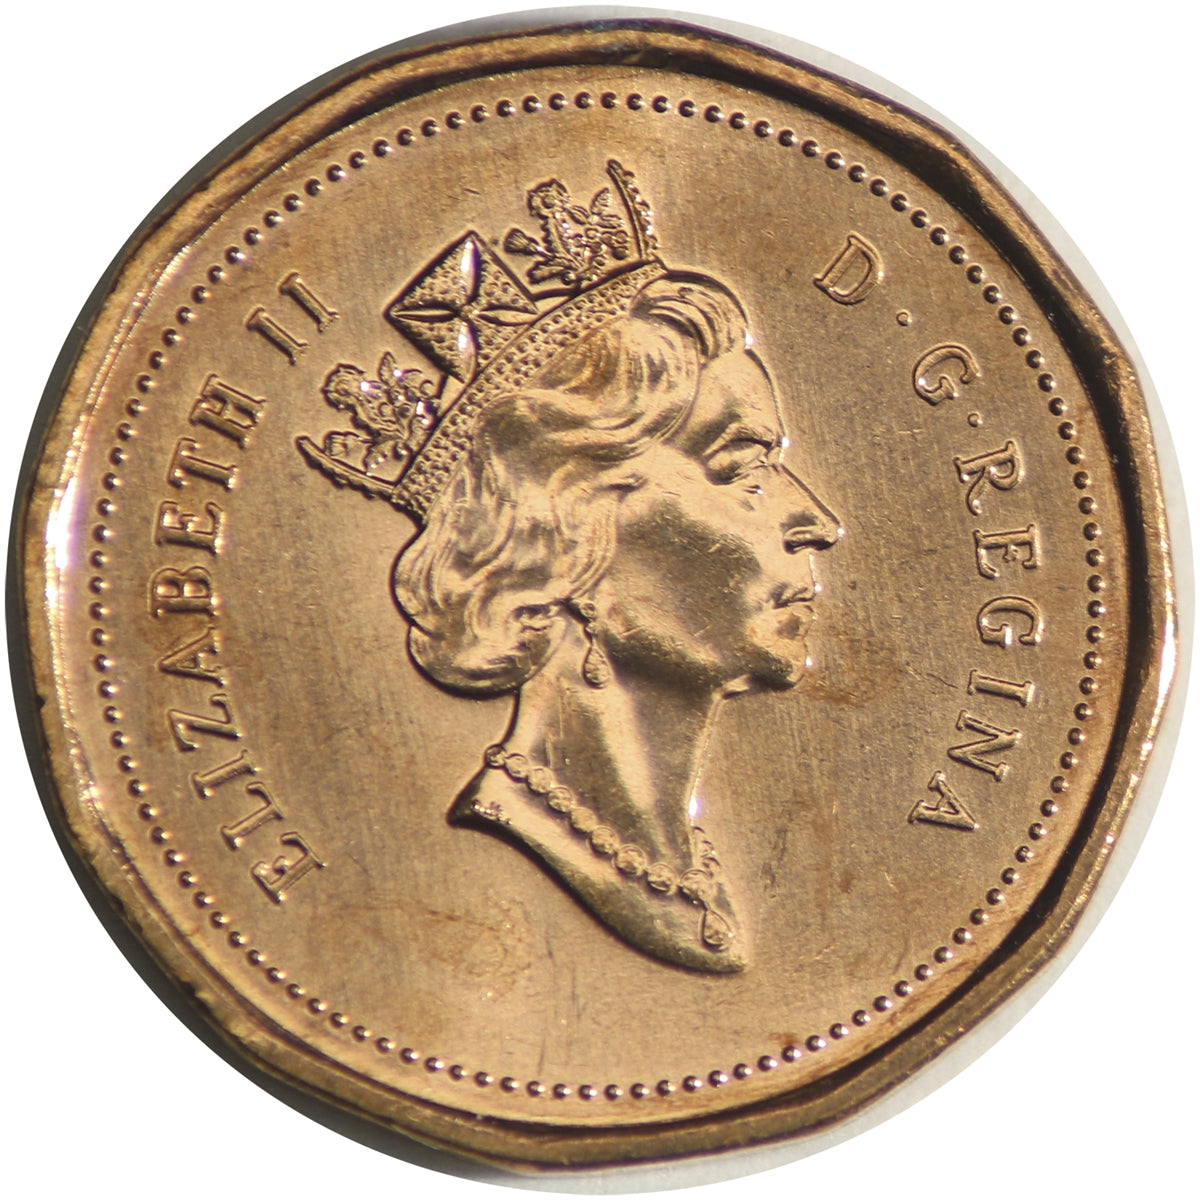 1990 Canada 1-cent Brilliant Uncirculated (MS-63)